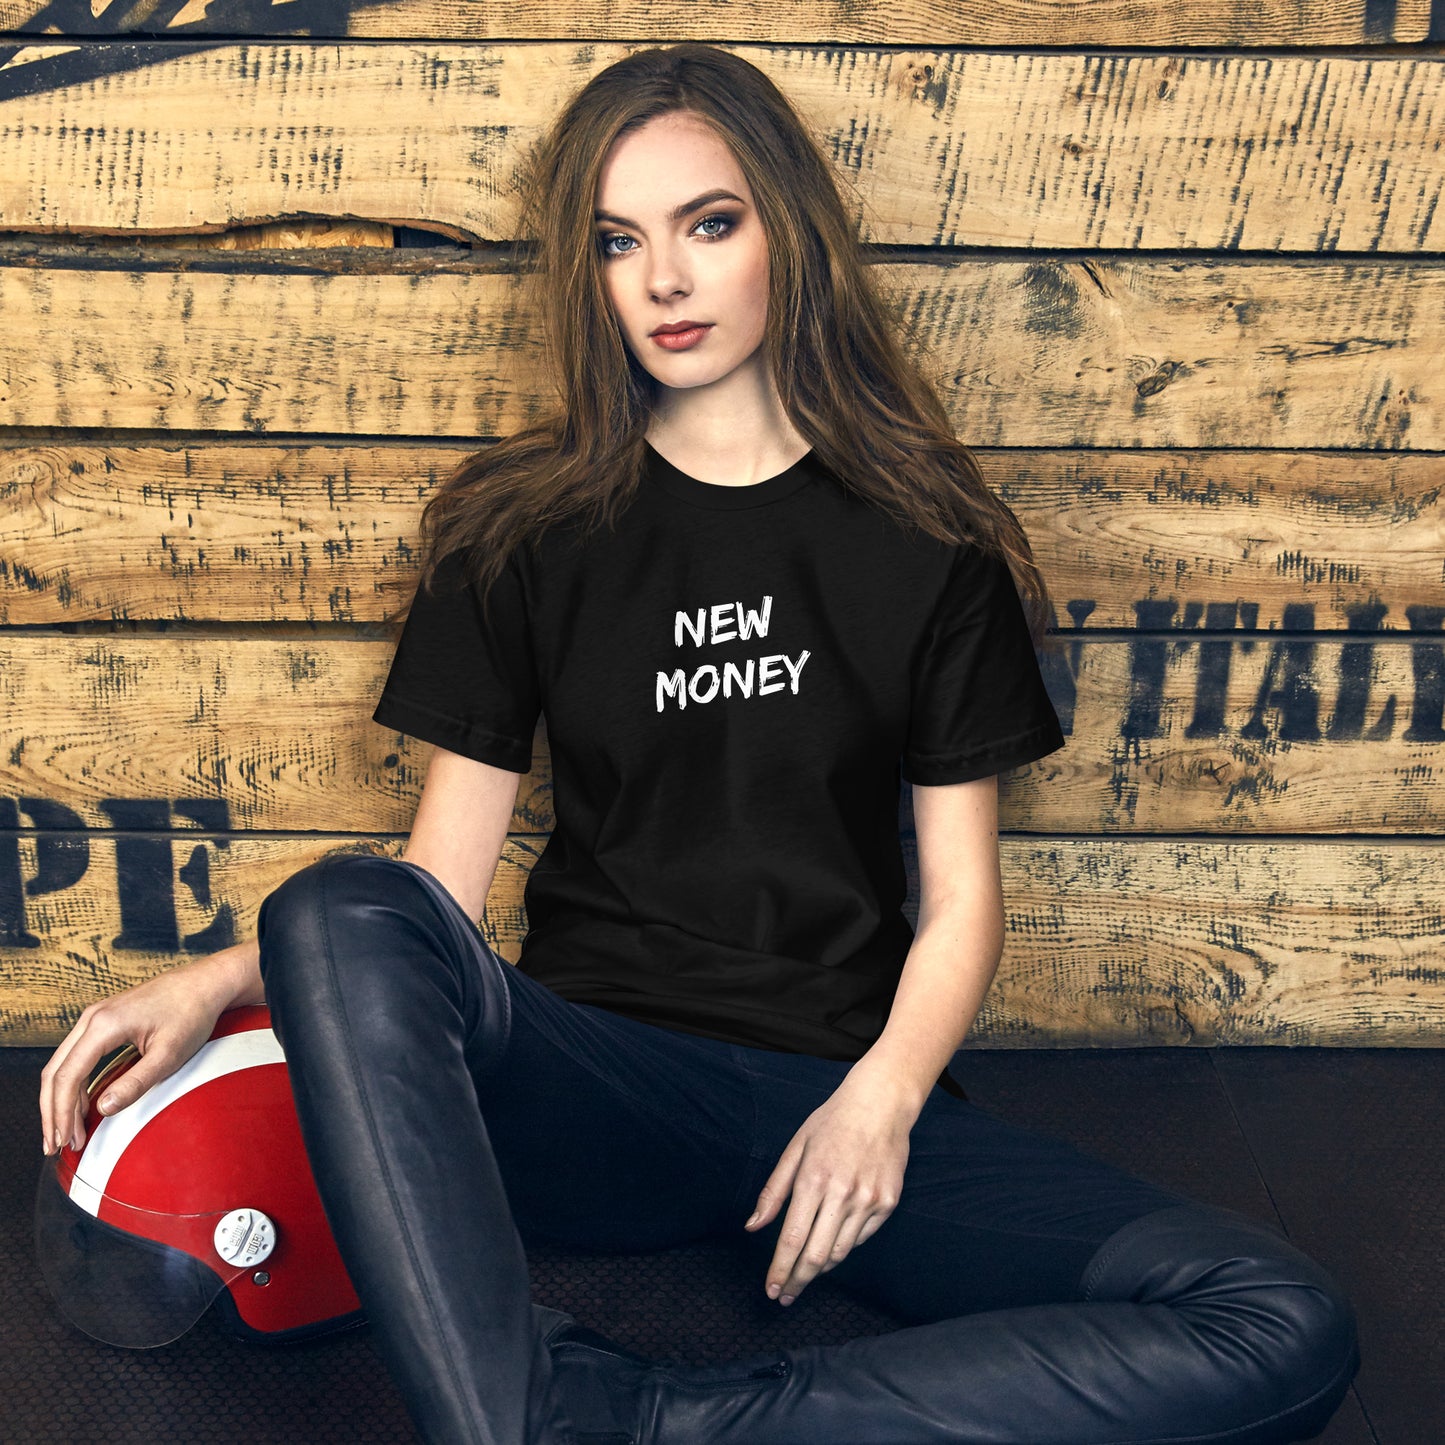 New Money - White Text - Unisex T-shirt